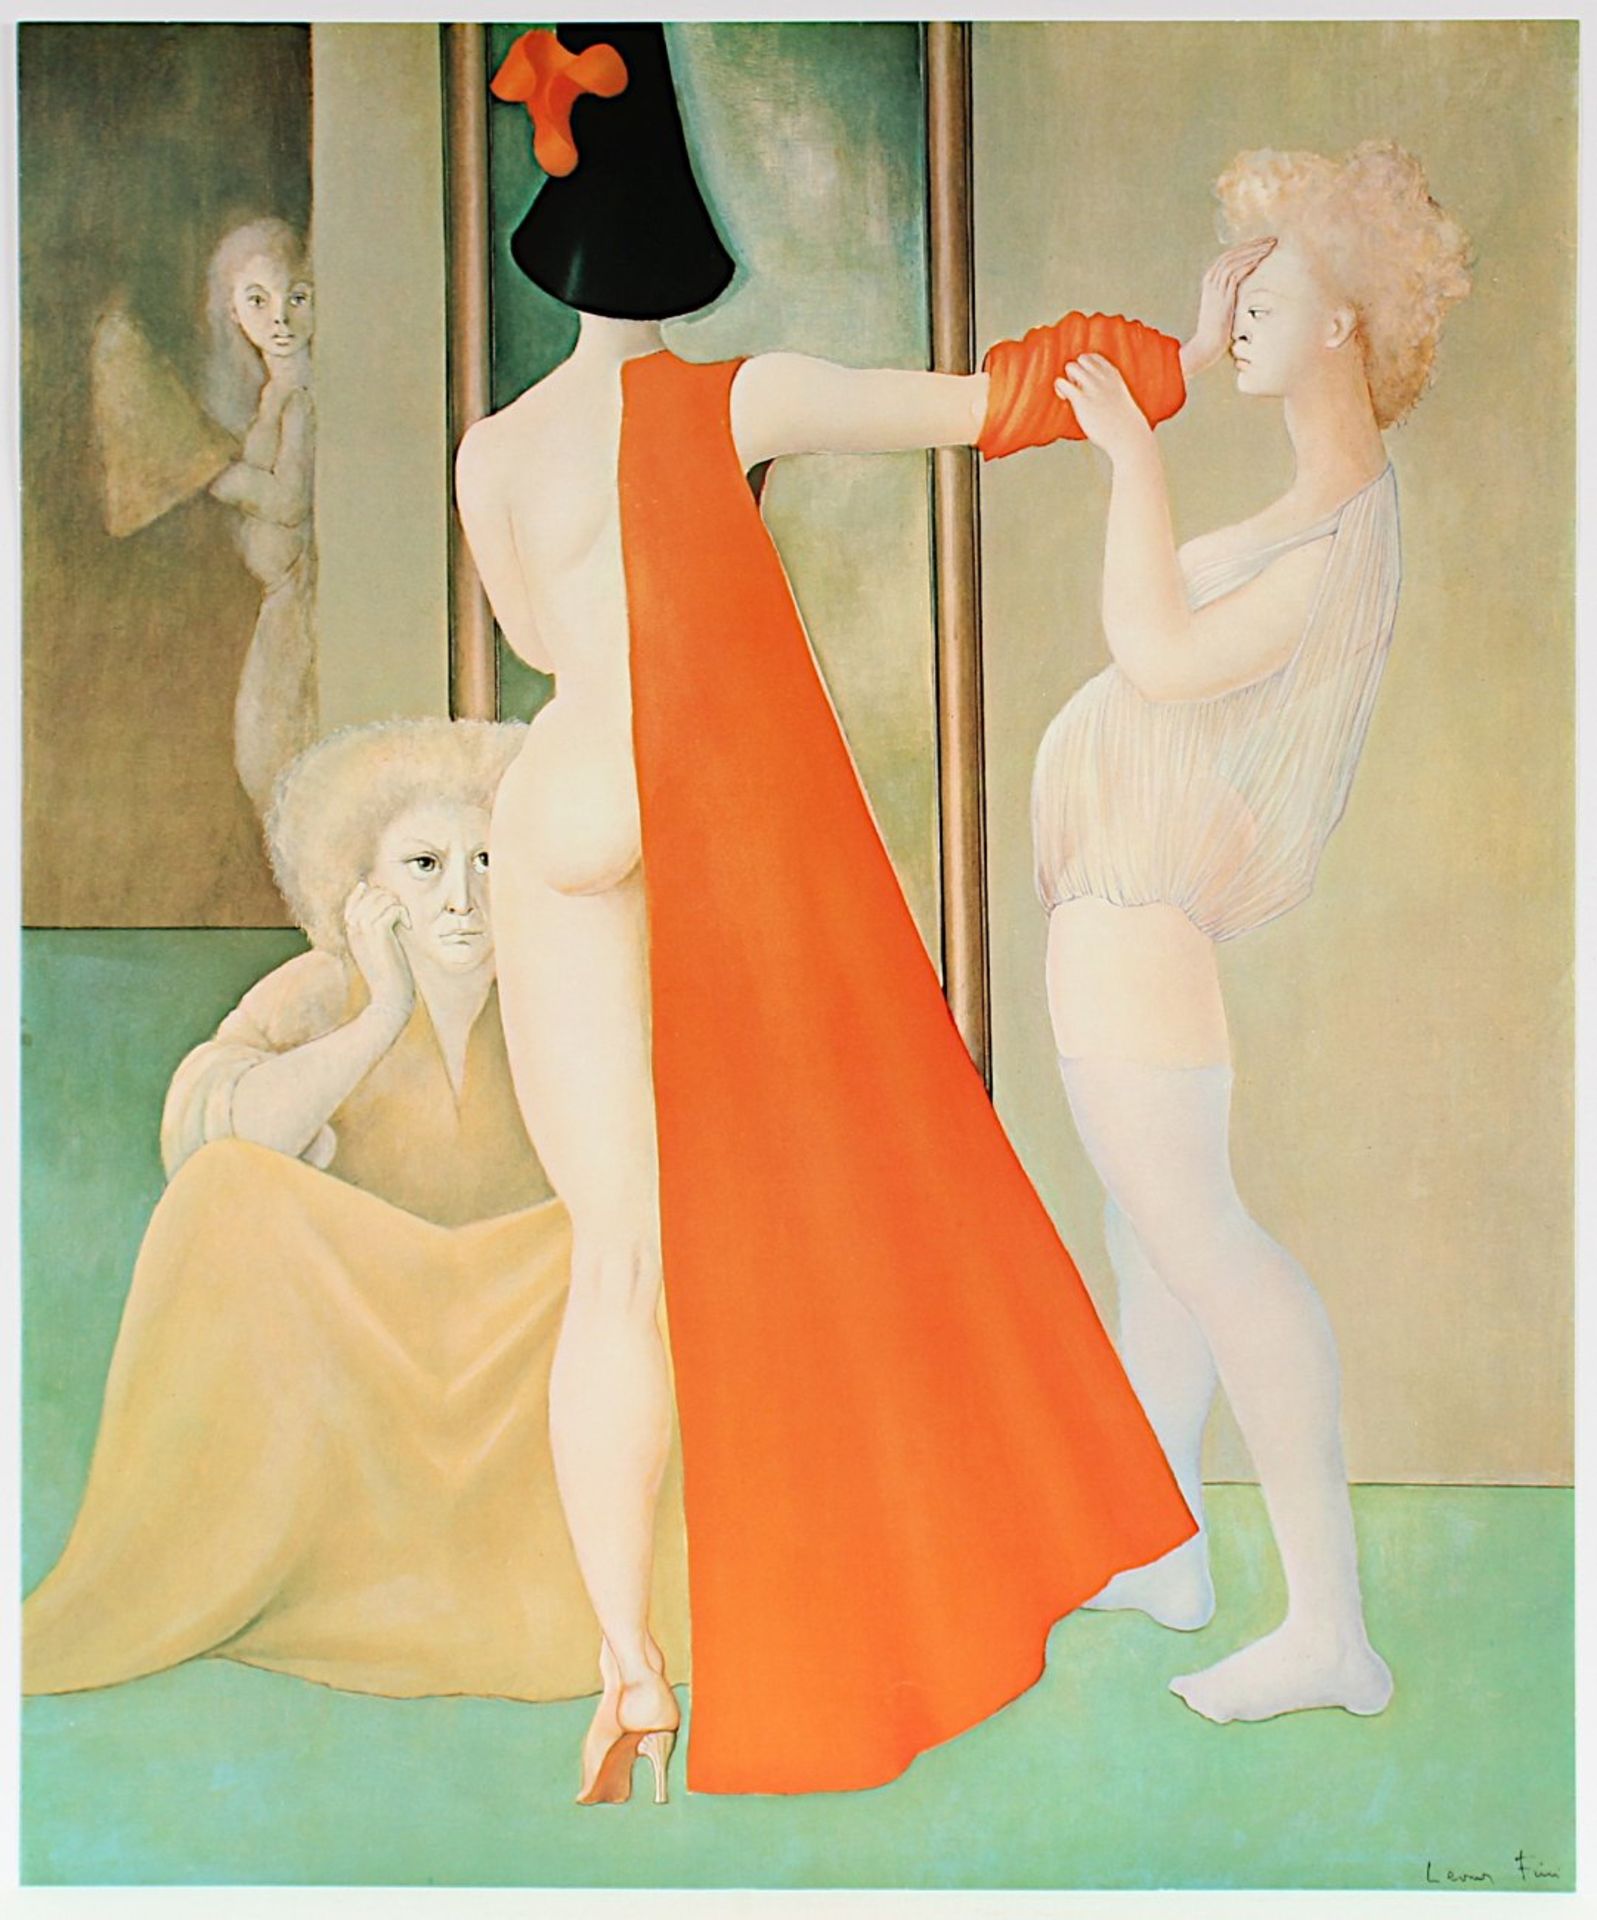 FINI, Leonor, "Figuren", Farboffset, 72 x 59, ungerahmt